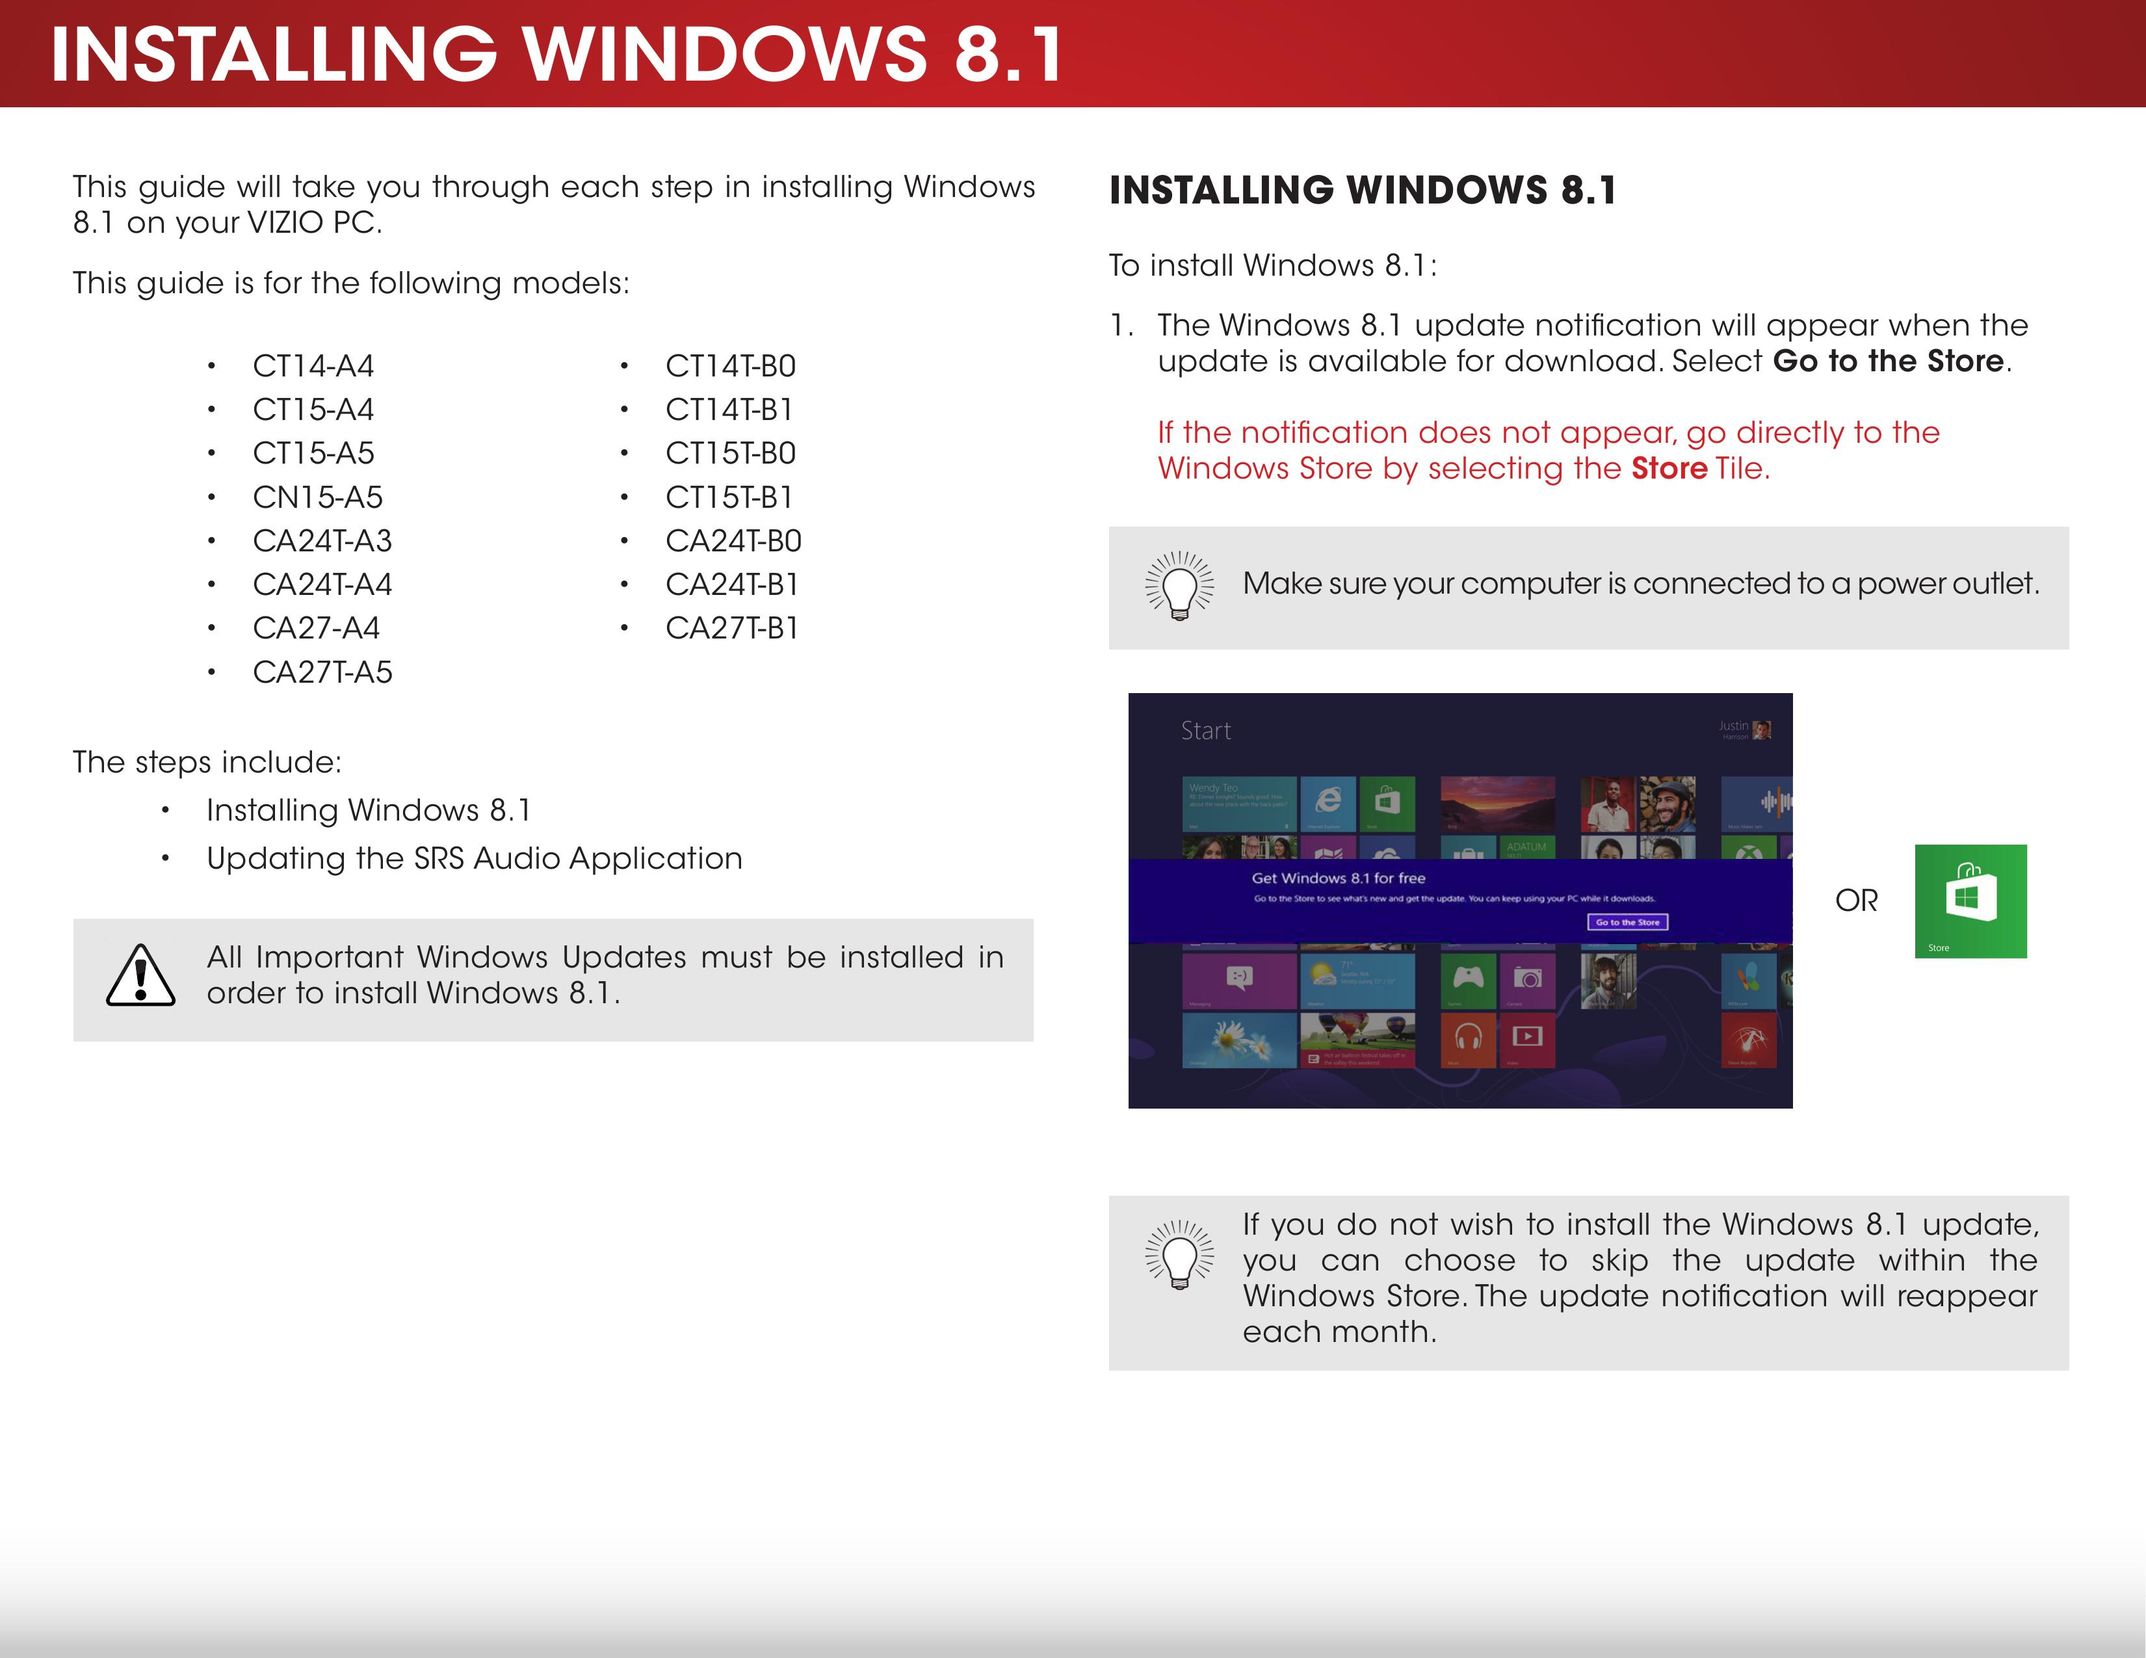 Microsoft CA27-A4 Window User Manual